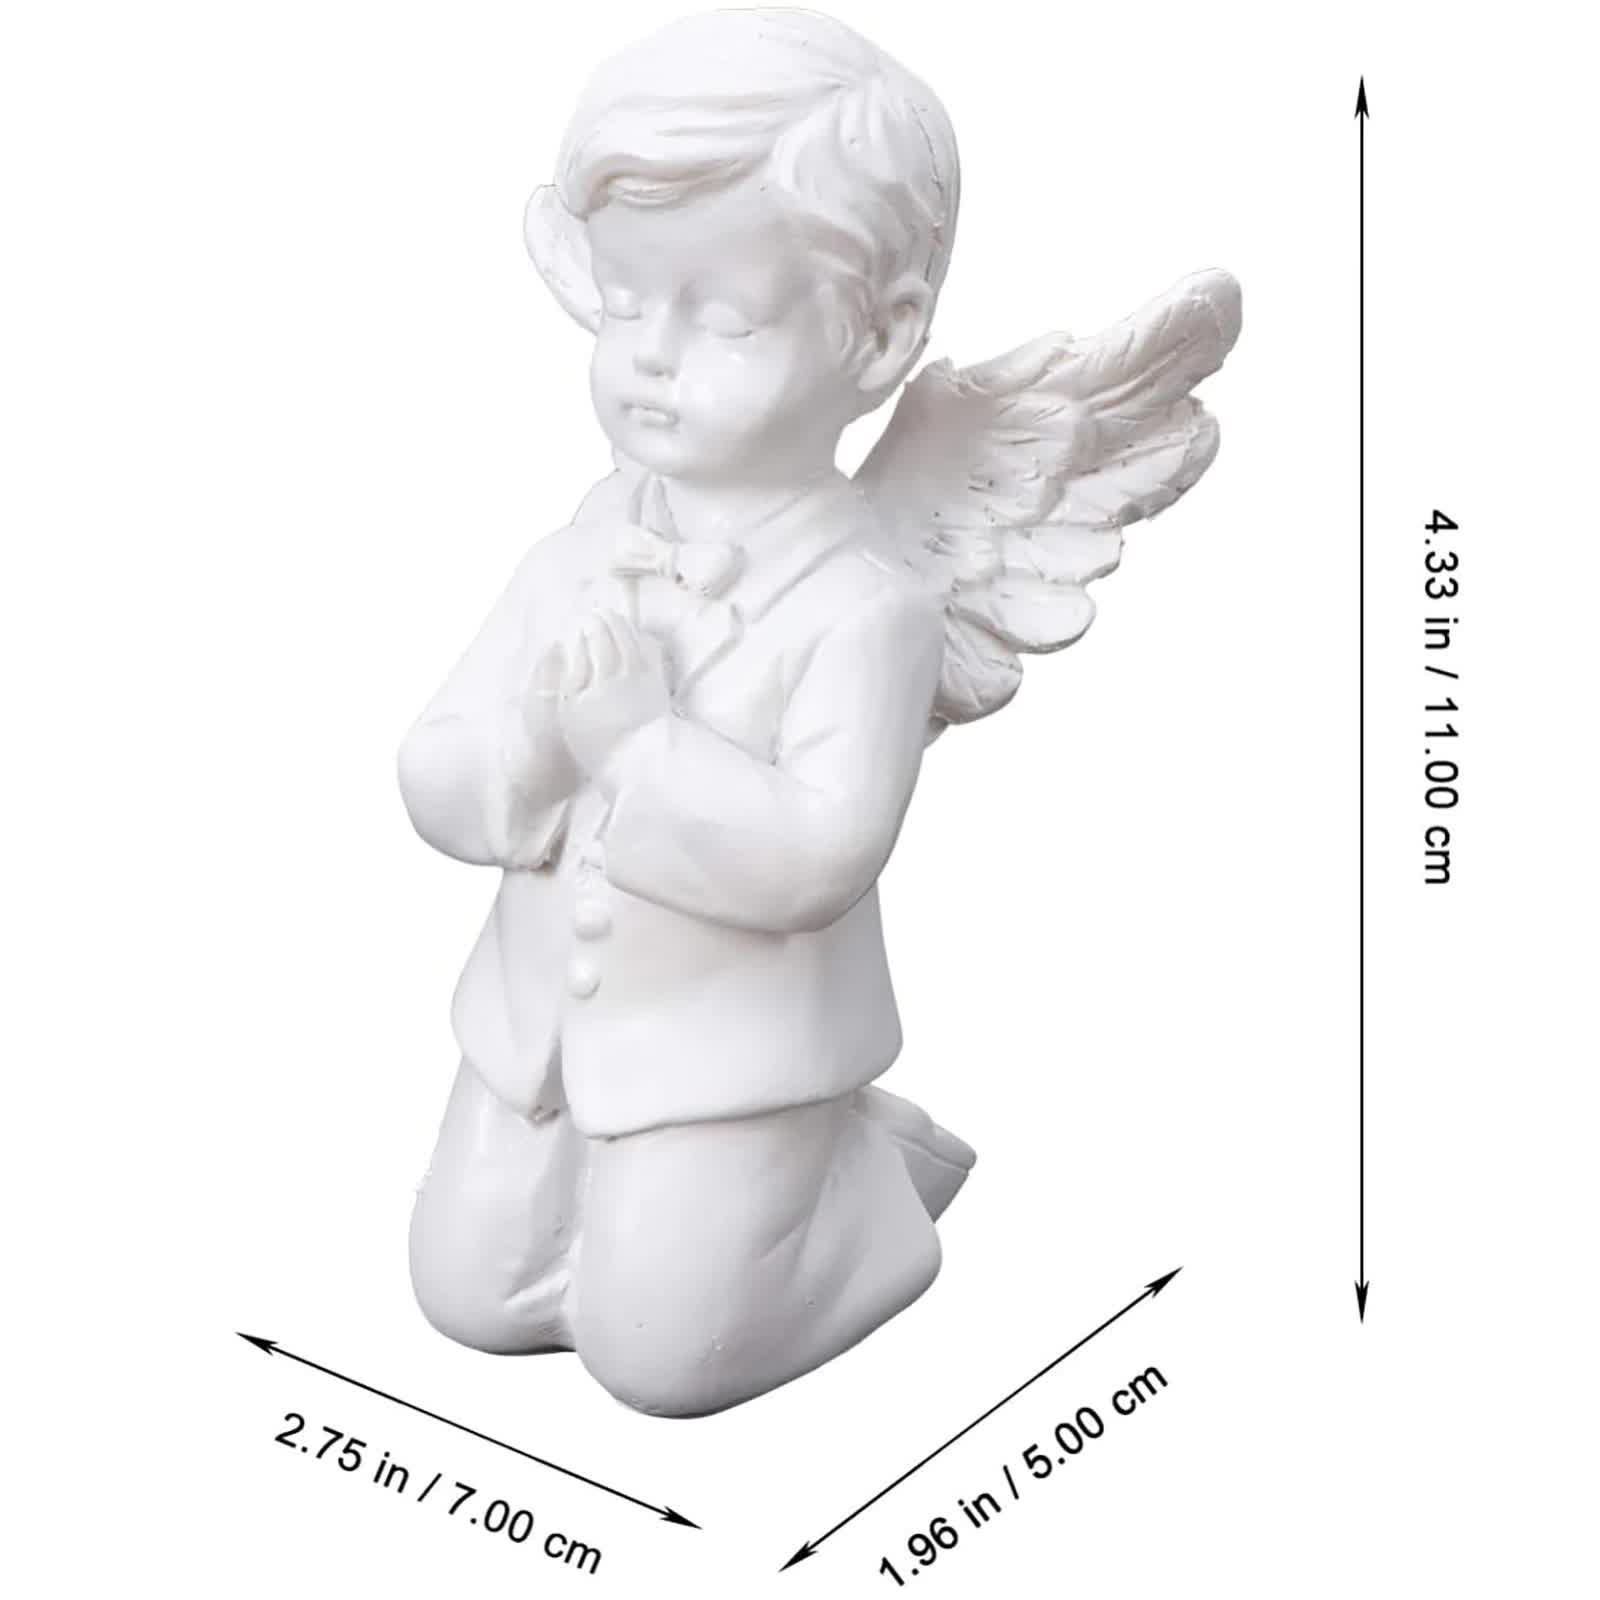 2pcs/set Angels Statues European Home Desktop Pray Resin White Cute Cupid Angel